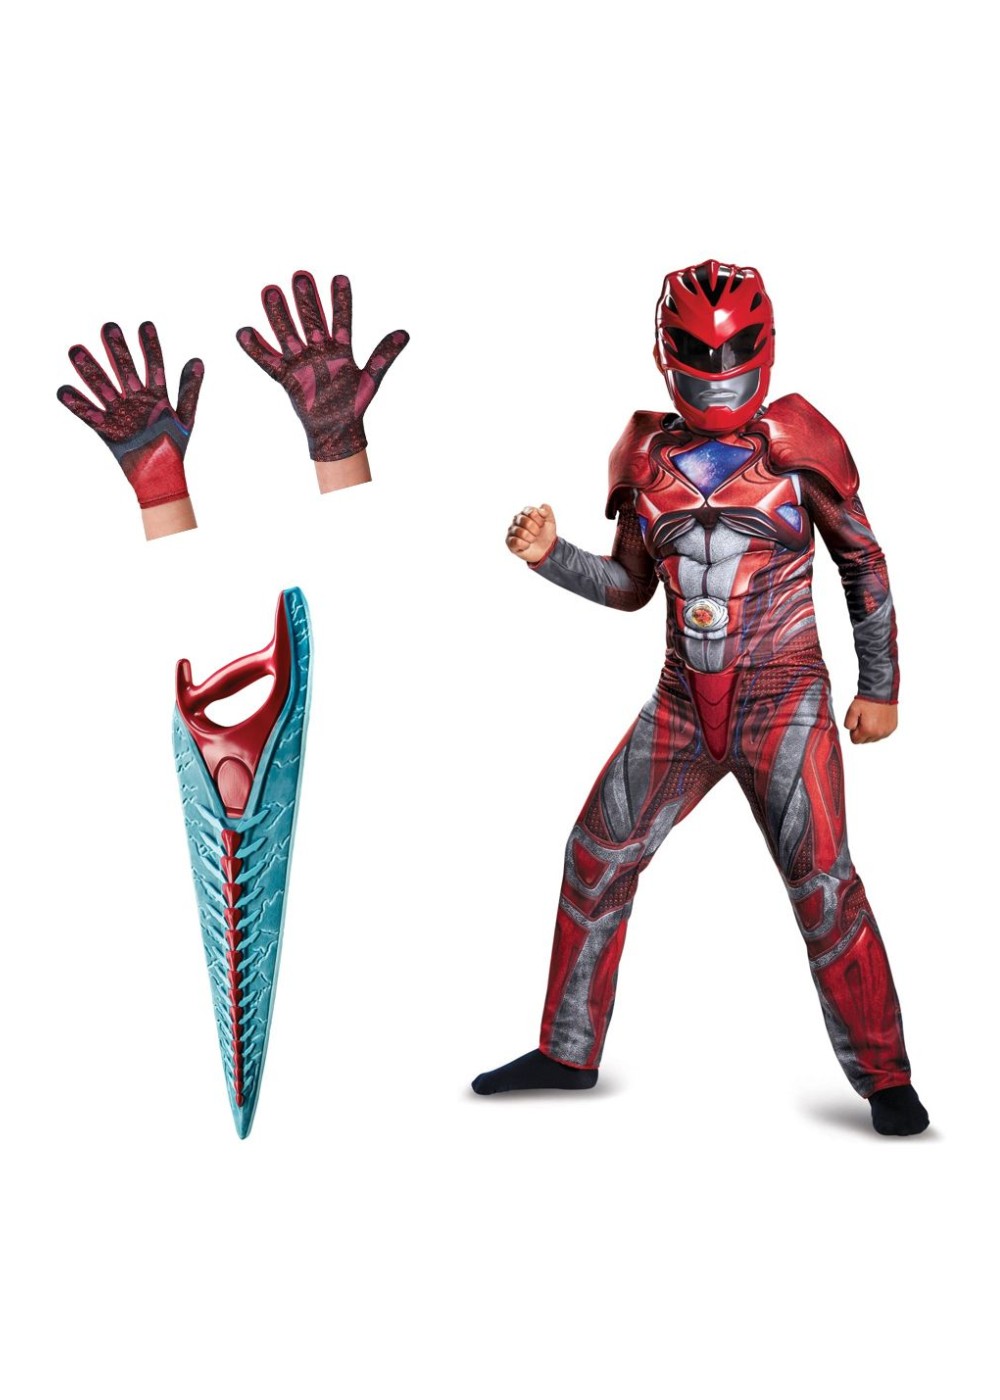 Boys Red Power Ranger Movie Costume Gloves And Sword Set